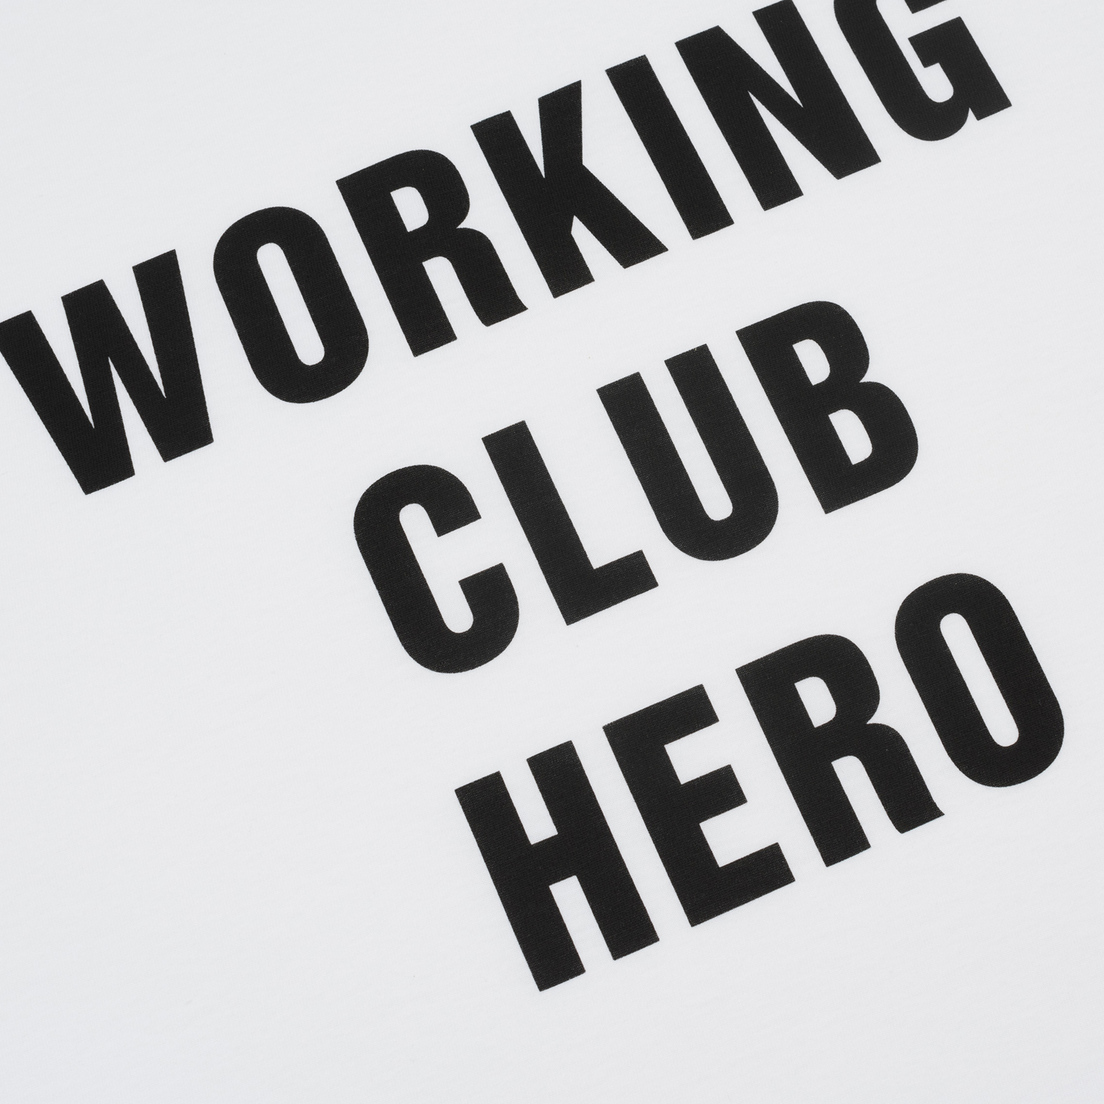 Carhartt WIP Мужская футболка Working Club